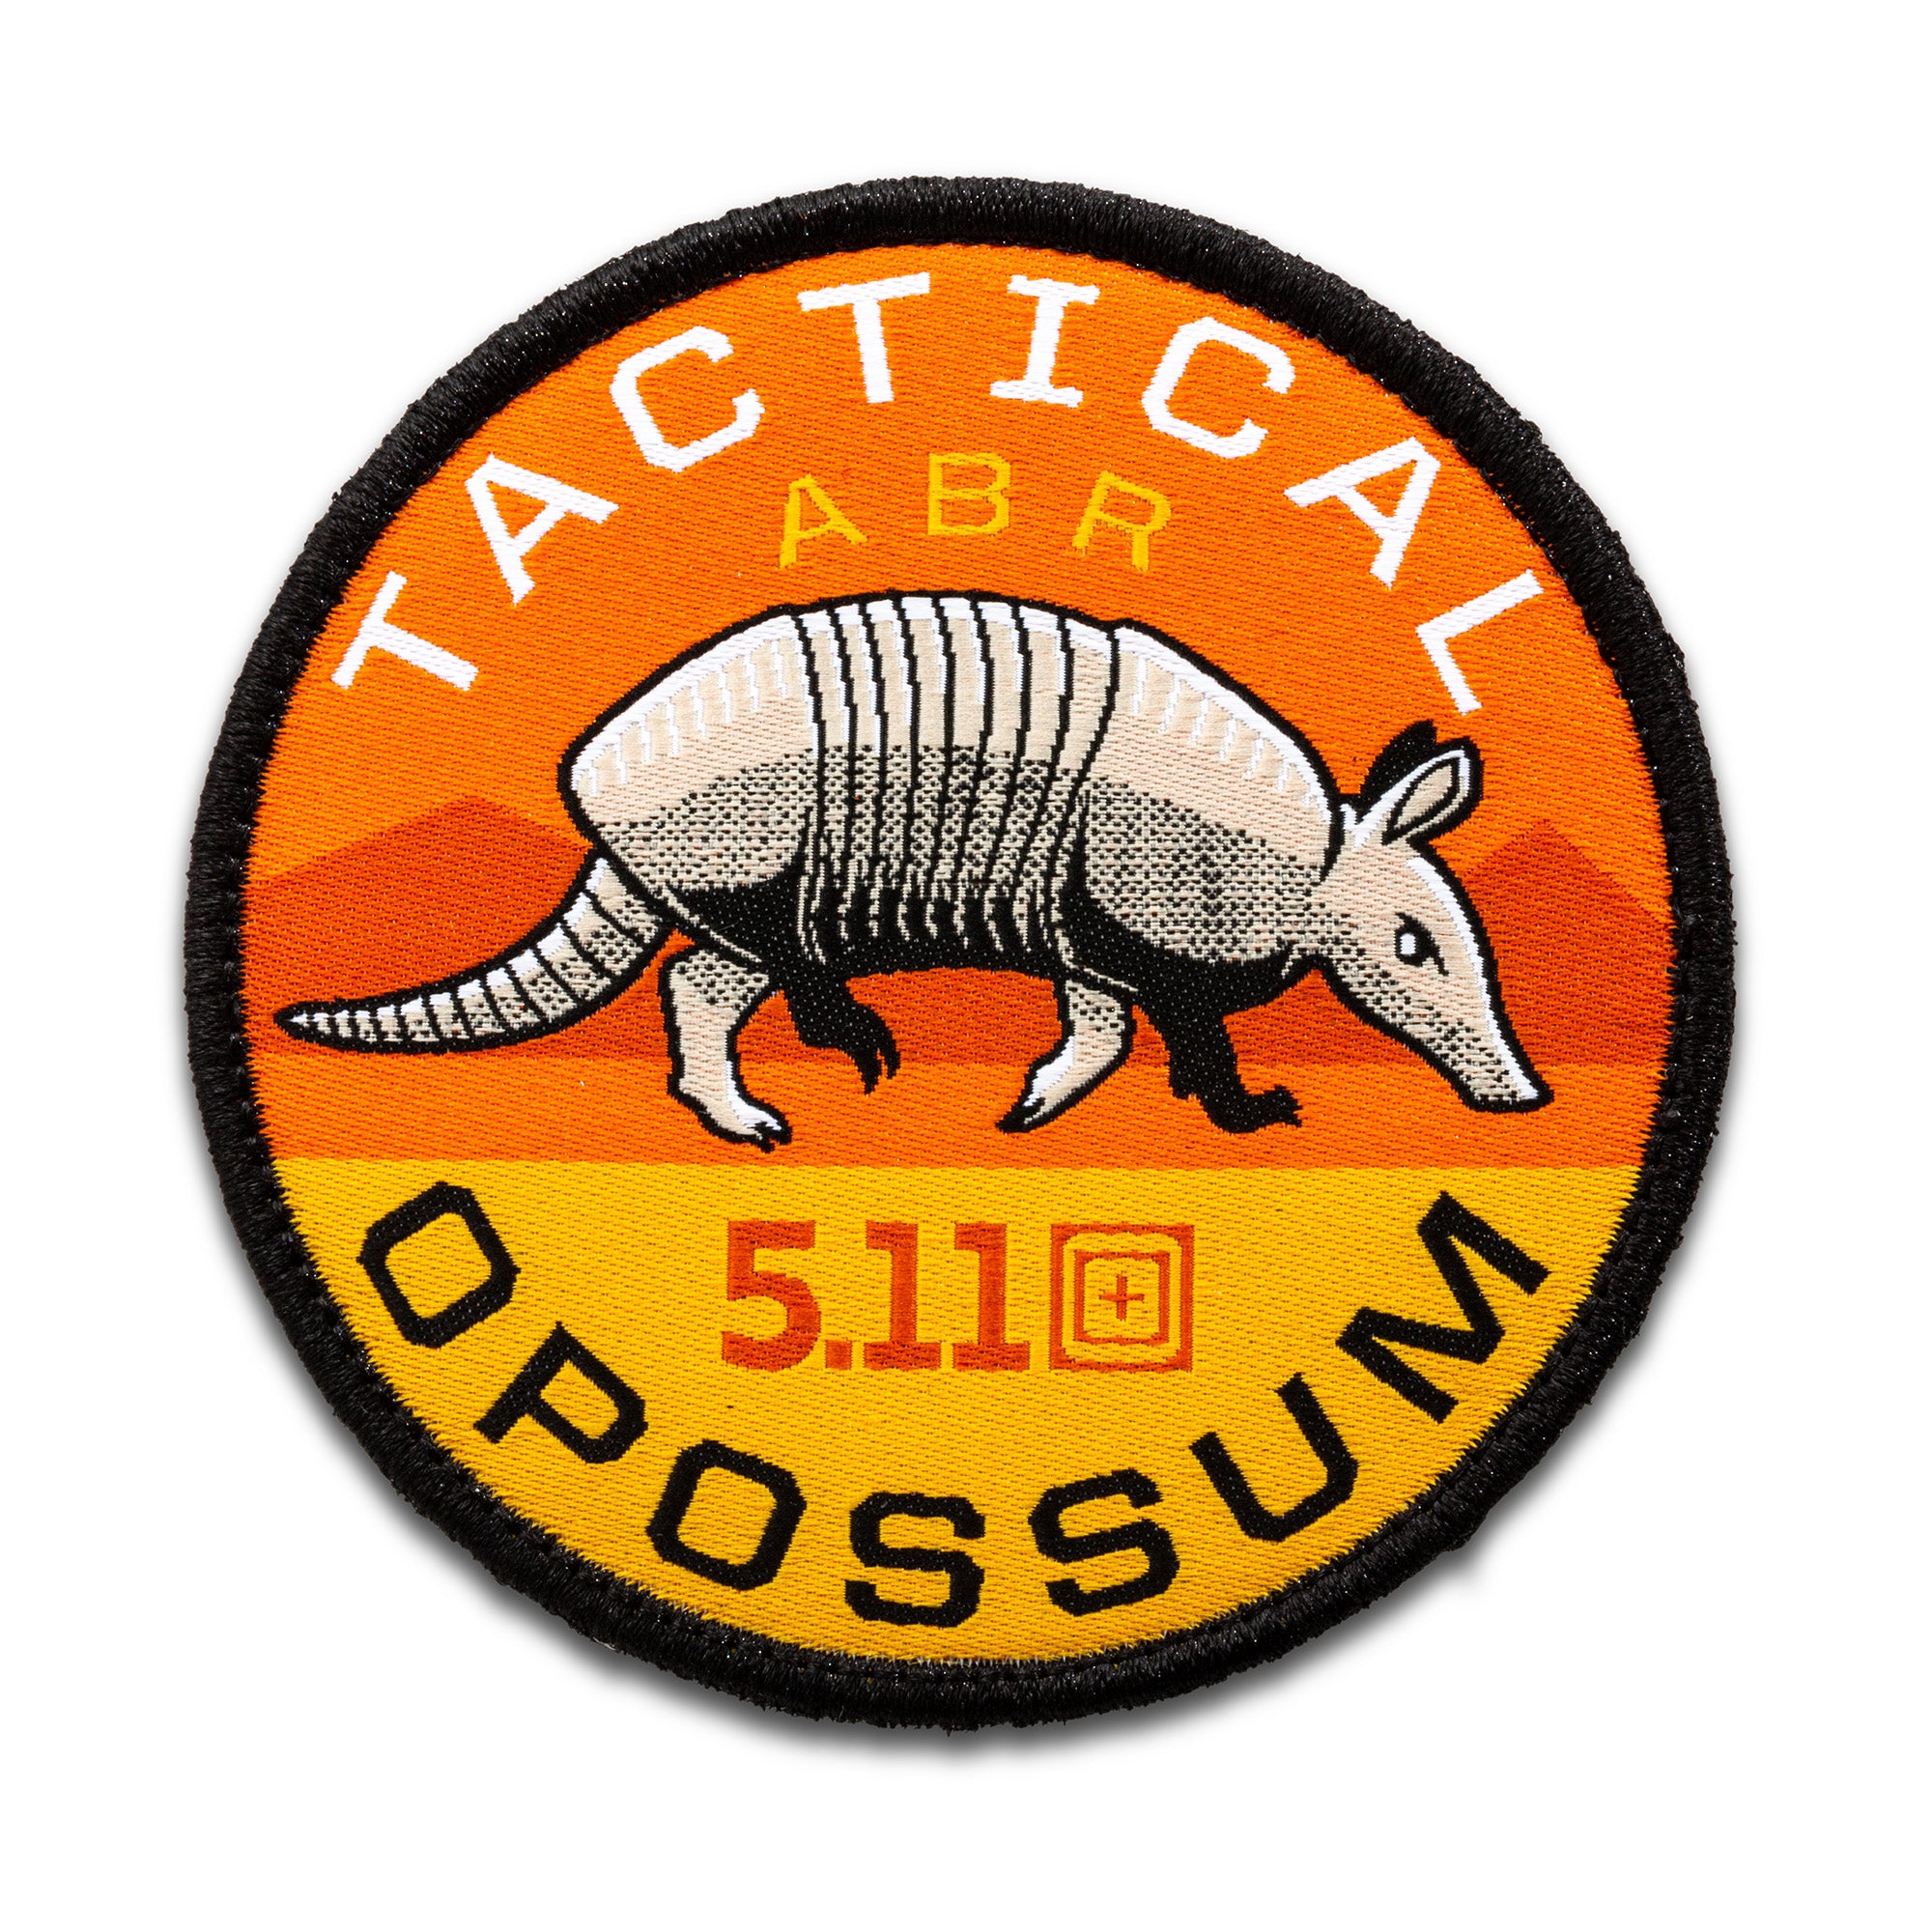 5.11 Tactical Opossum Patch